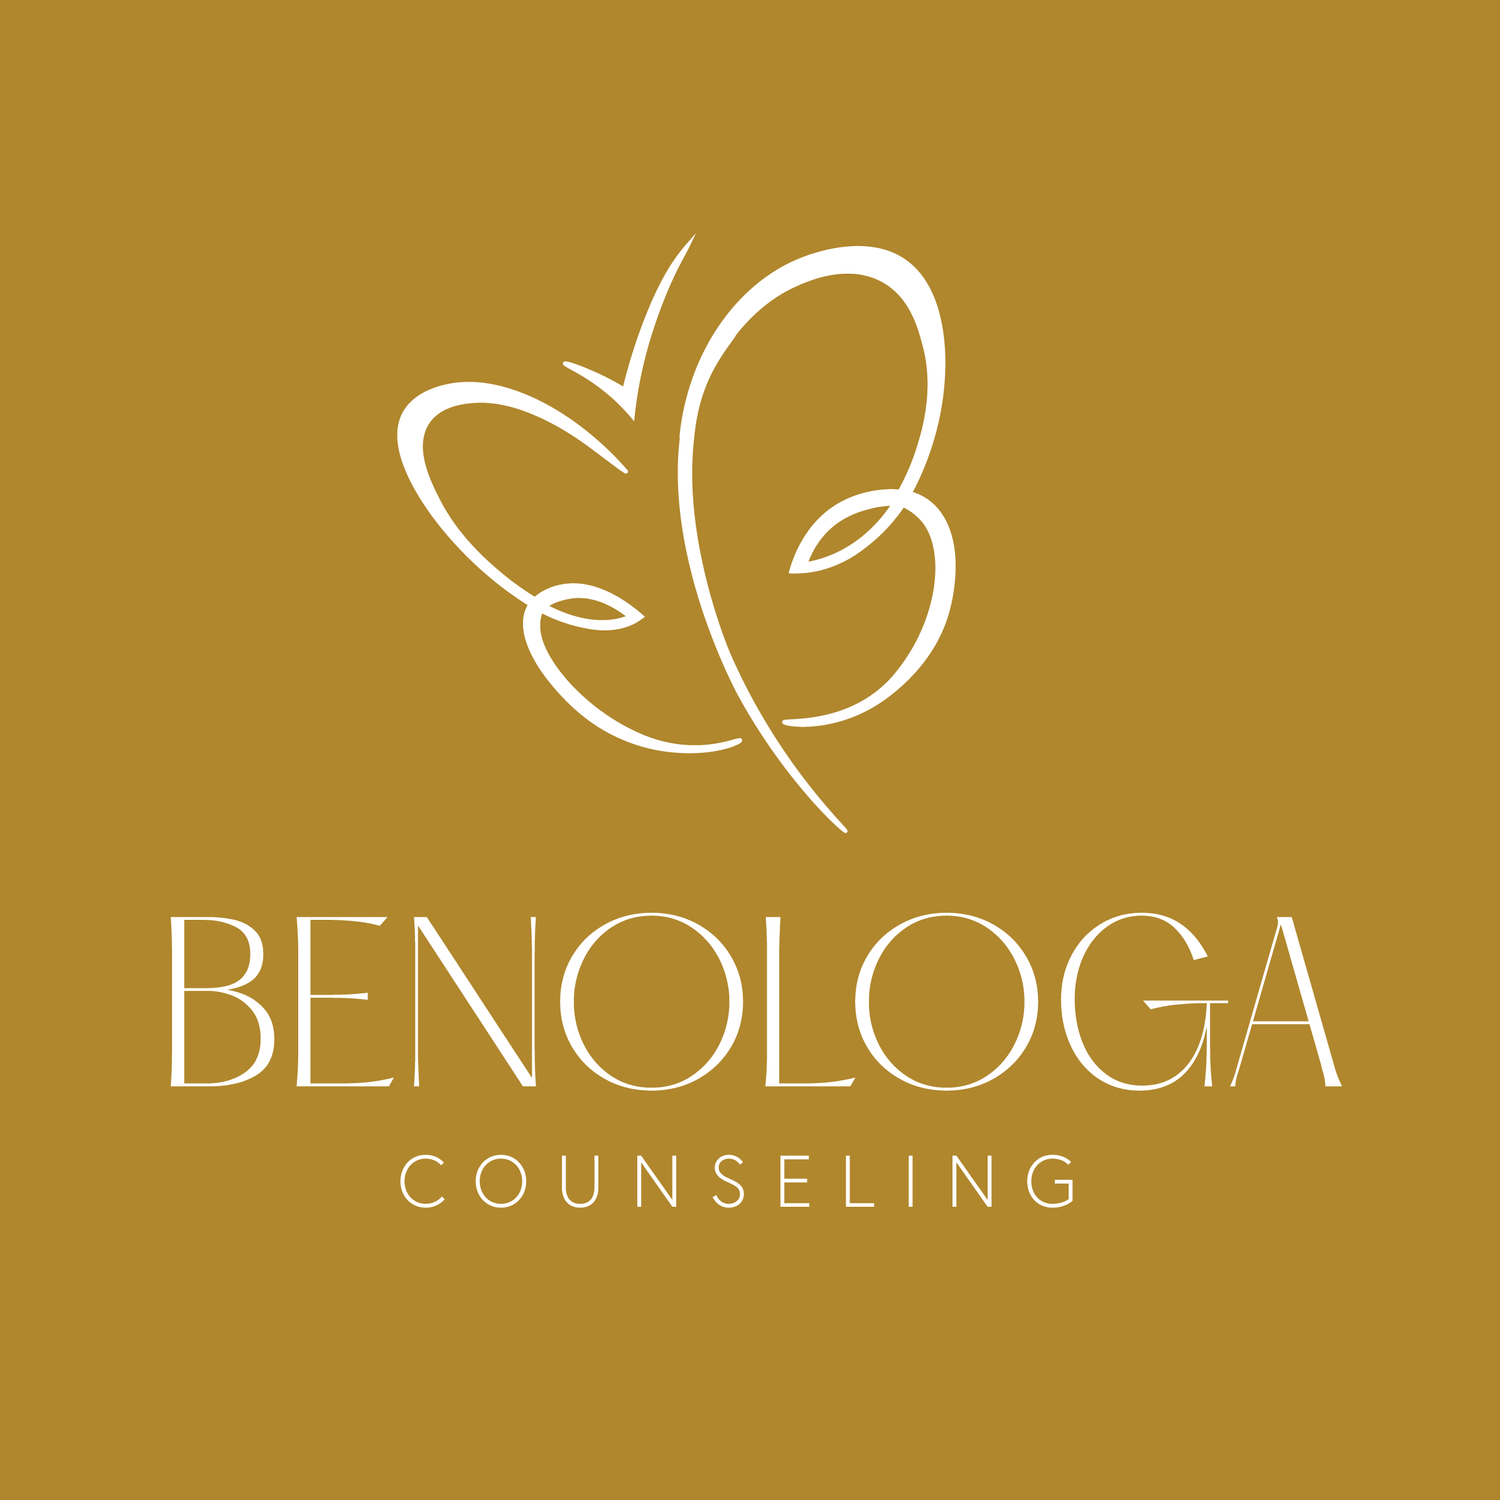 Benologa Counseling